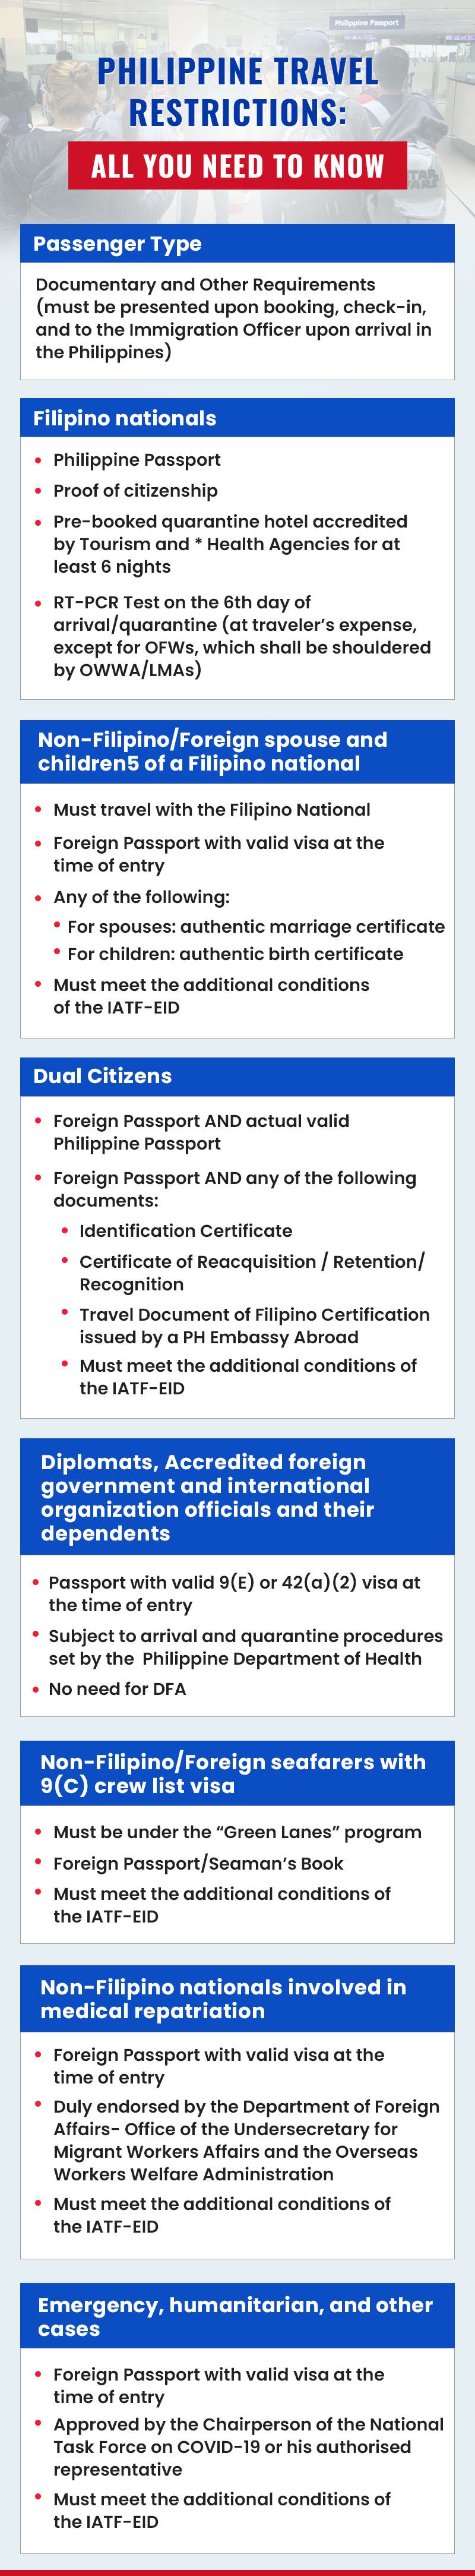 Philippine travel restrictions